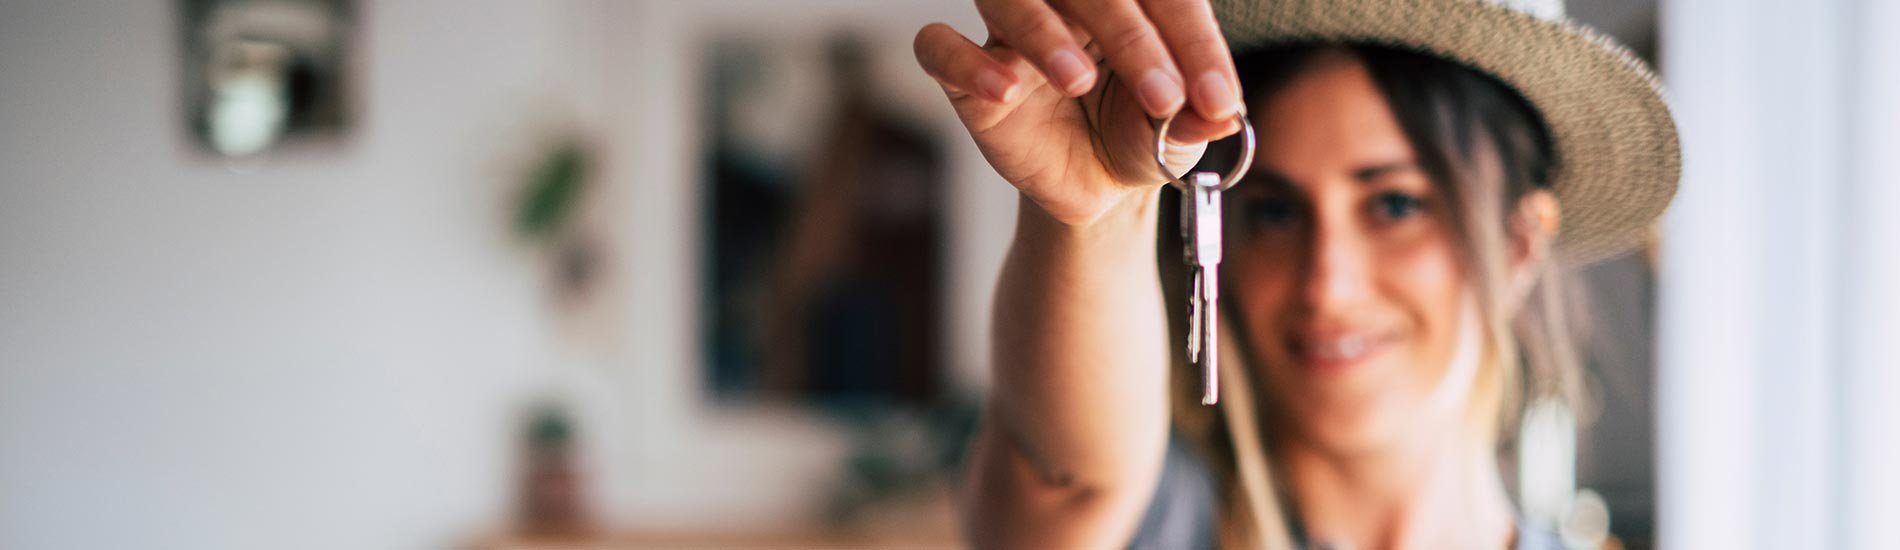 Woman holding a set of house keys